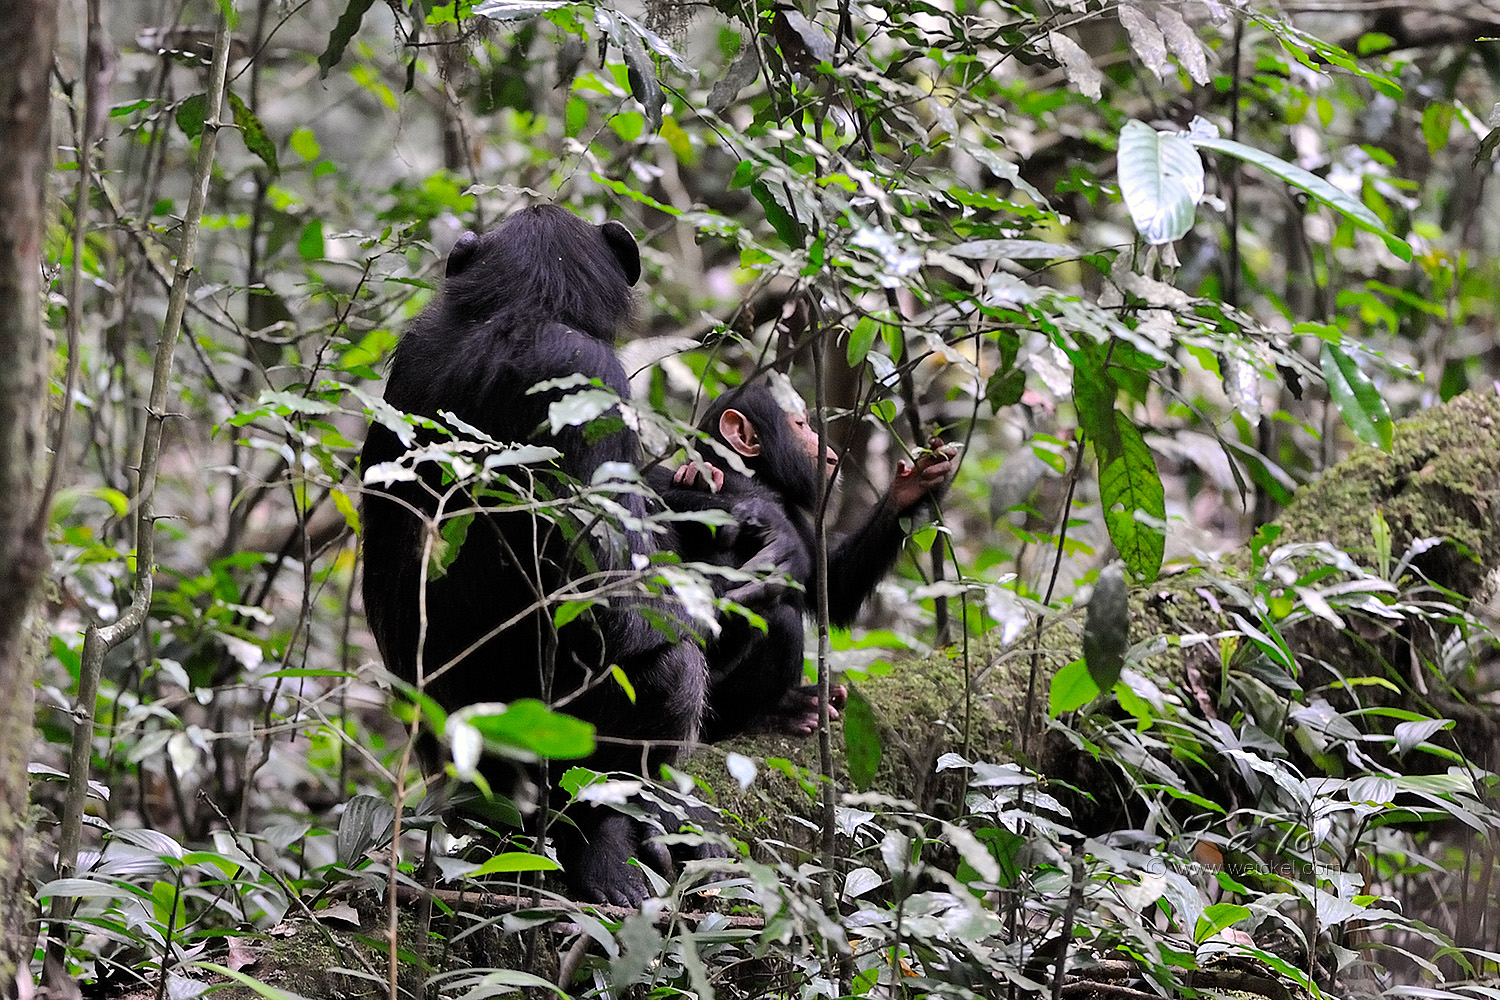 Kibale Forest N.P. - Chimpanzee